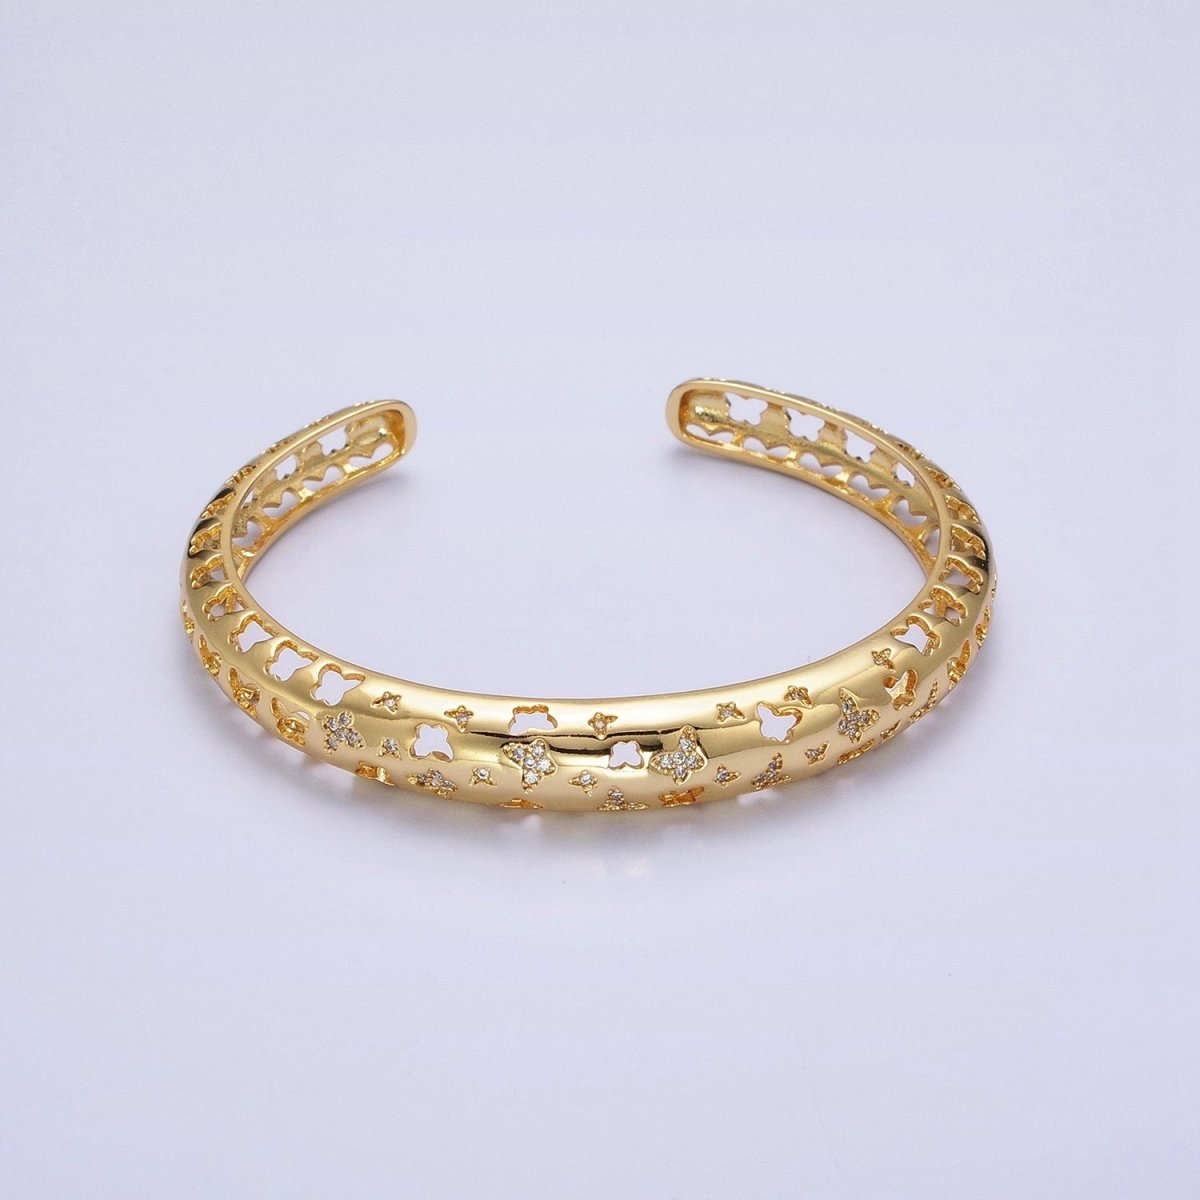 Gold Butterfly Wrist Cuff Bangle Bracelet CZ Mariposa Bracelet for Stackable Jewelry | WA-1685 WA-1686 Clearance Pricing - DLUXCA